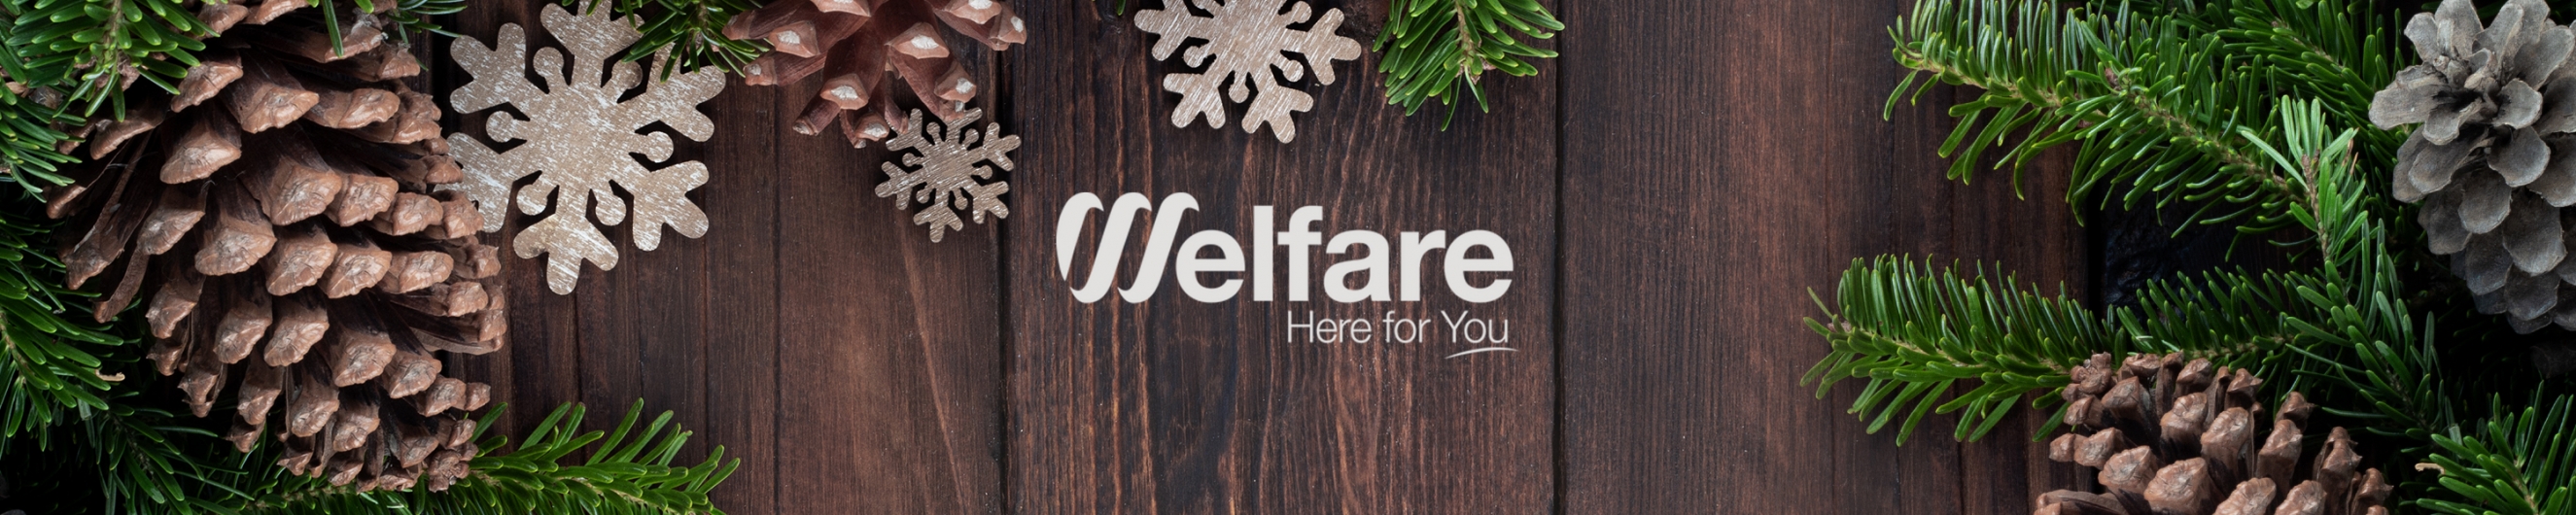 welfare logo on festive background